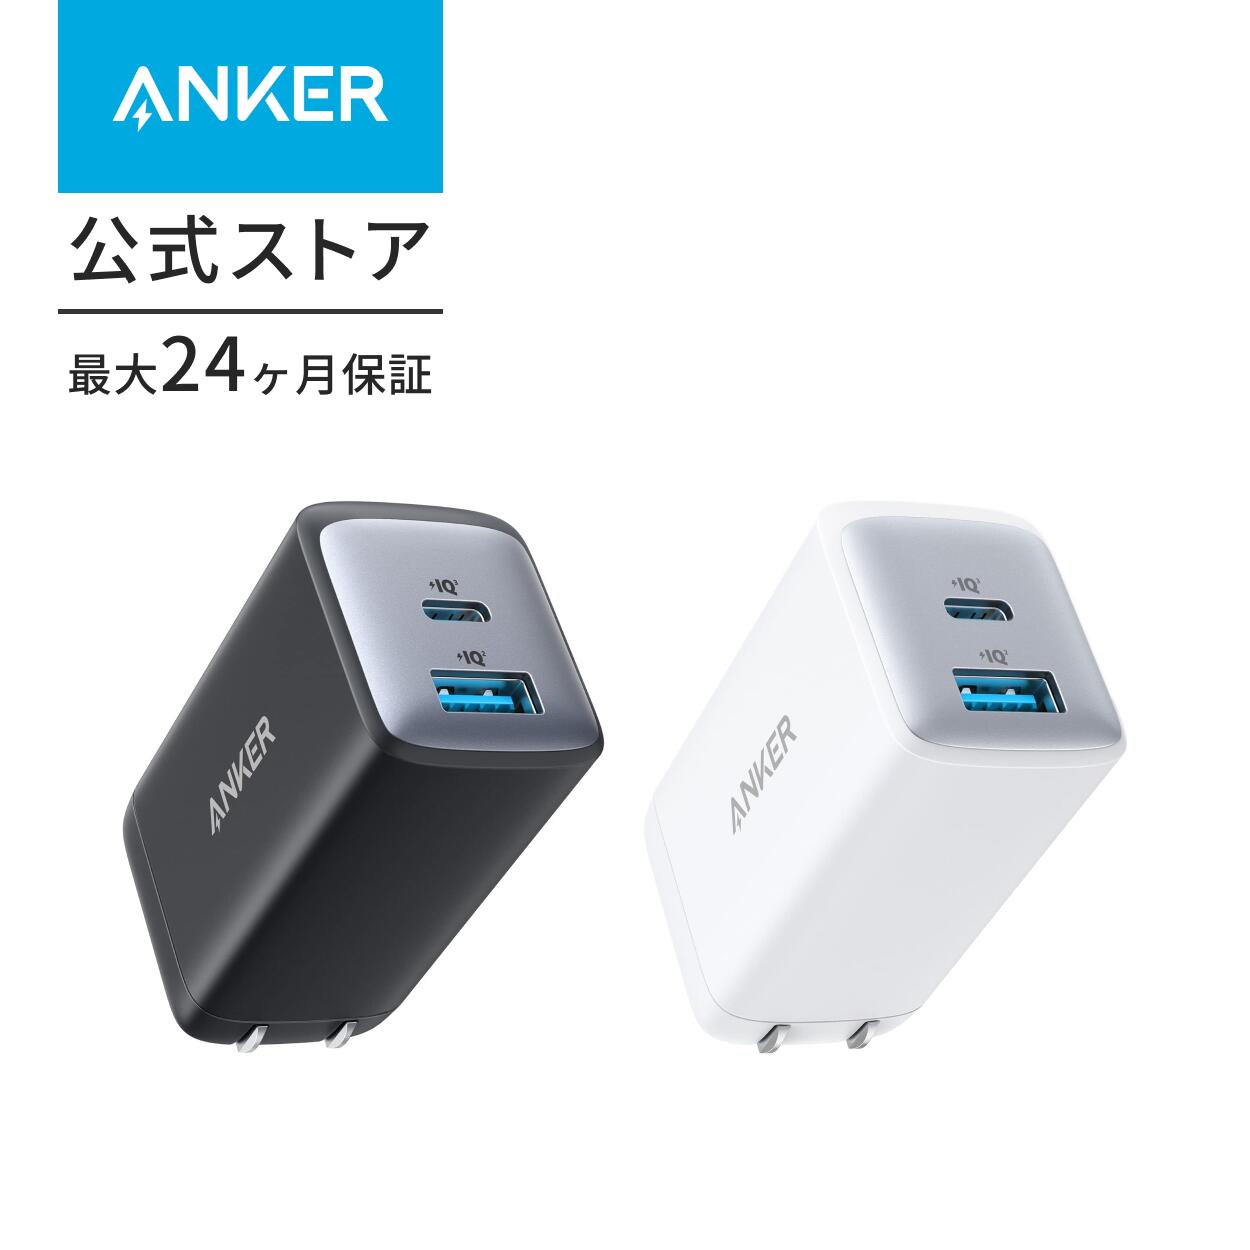 Anker 725 Charger (65W) (USB PD 65W 急速充電器)MacBook PD対応Windows PC iPad iPhone Galaxy Android スマートフォン ノートPC 各種